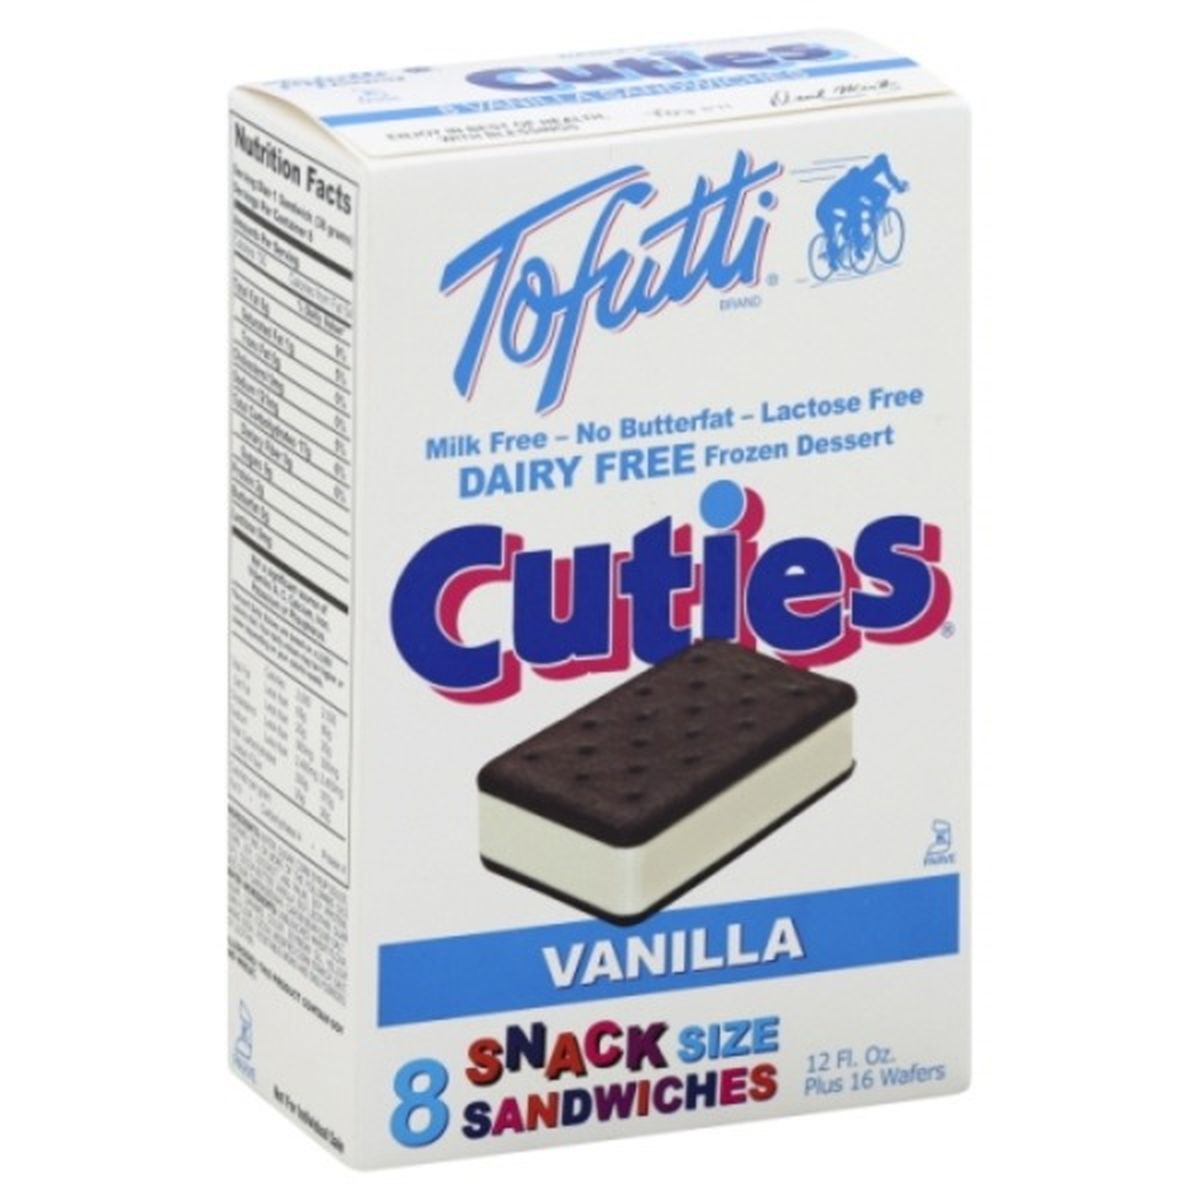 Calories in Tofutti Cuties Frozen Dessert, Dairy Free, Cuties, Snack Size Sandwiches, Vanilla